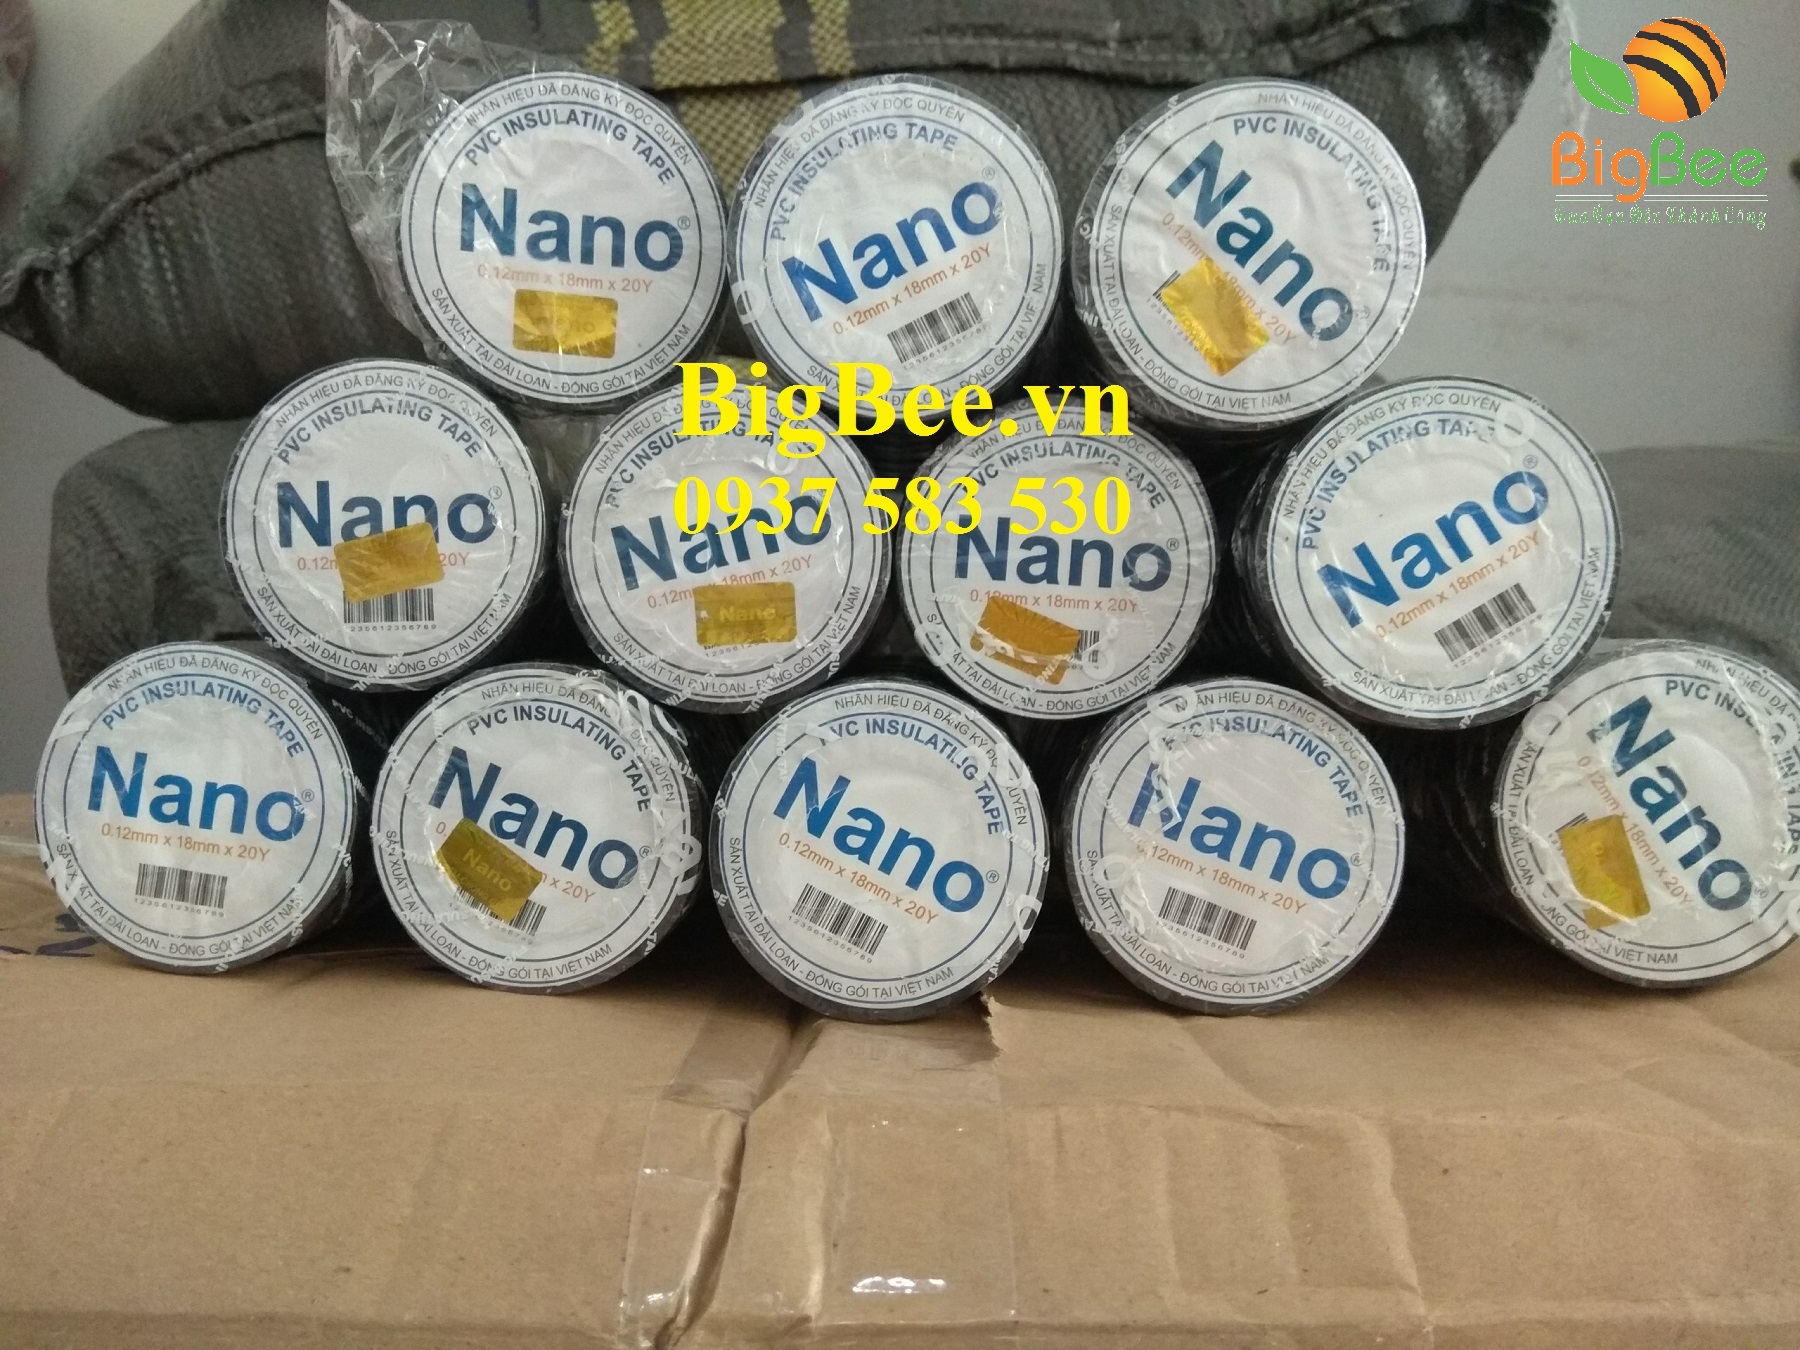  băng keo nano bigbee